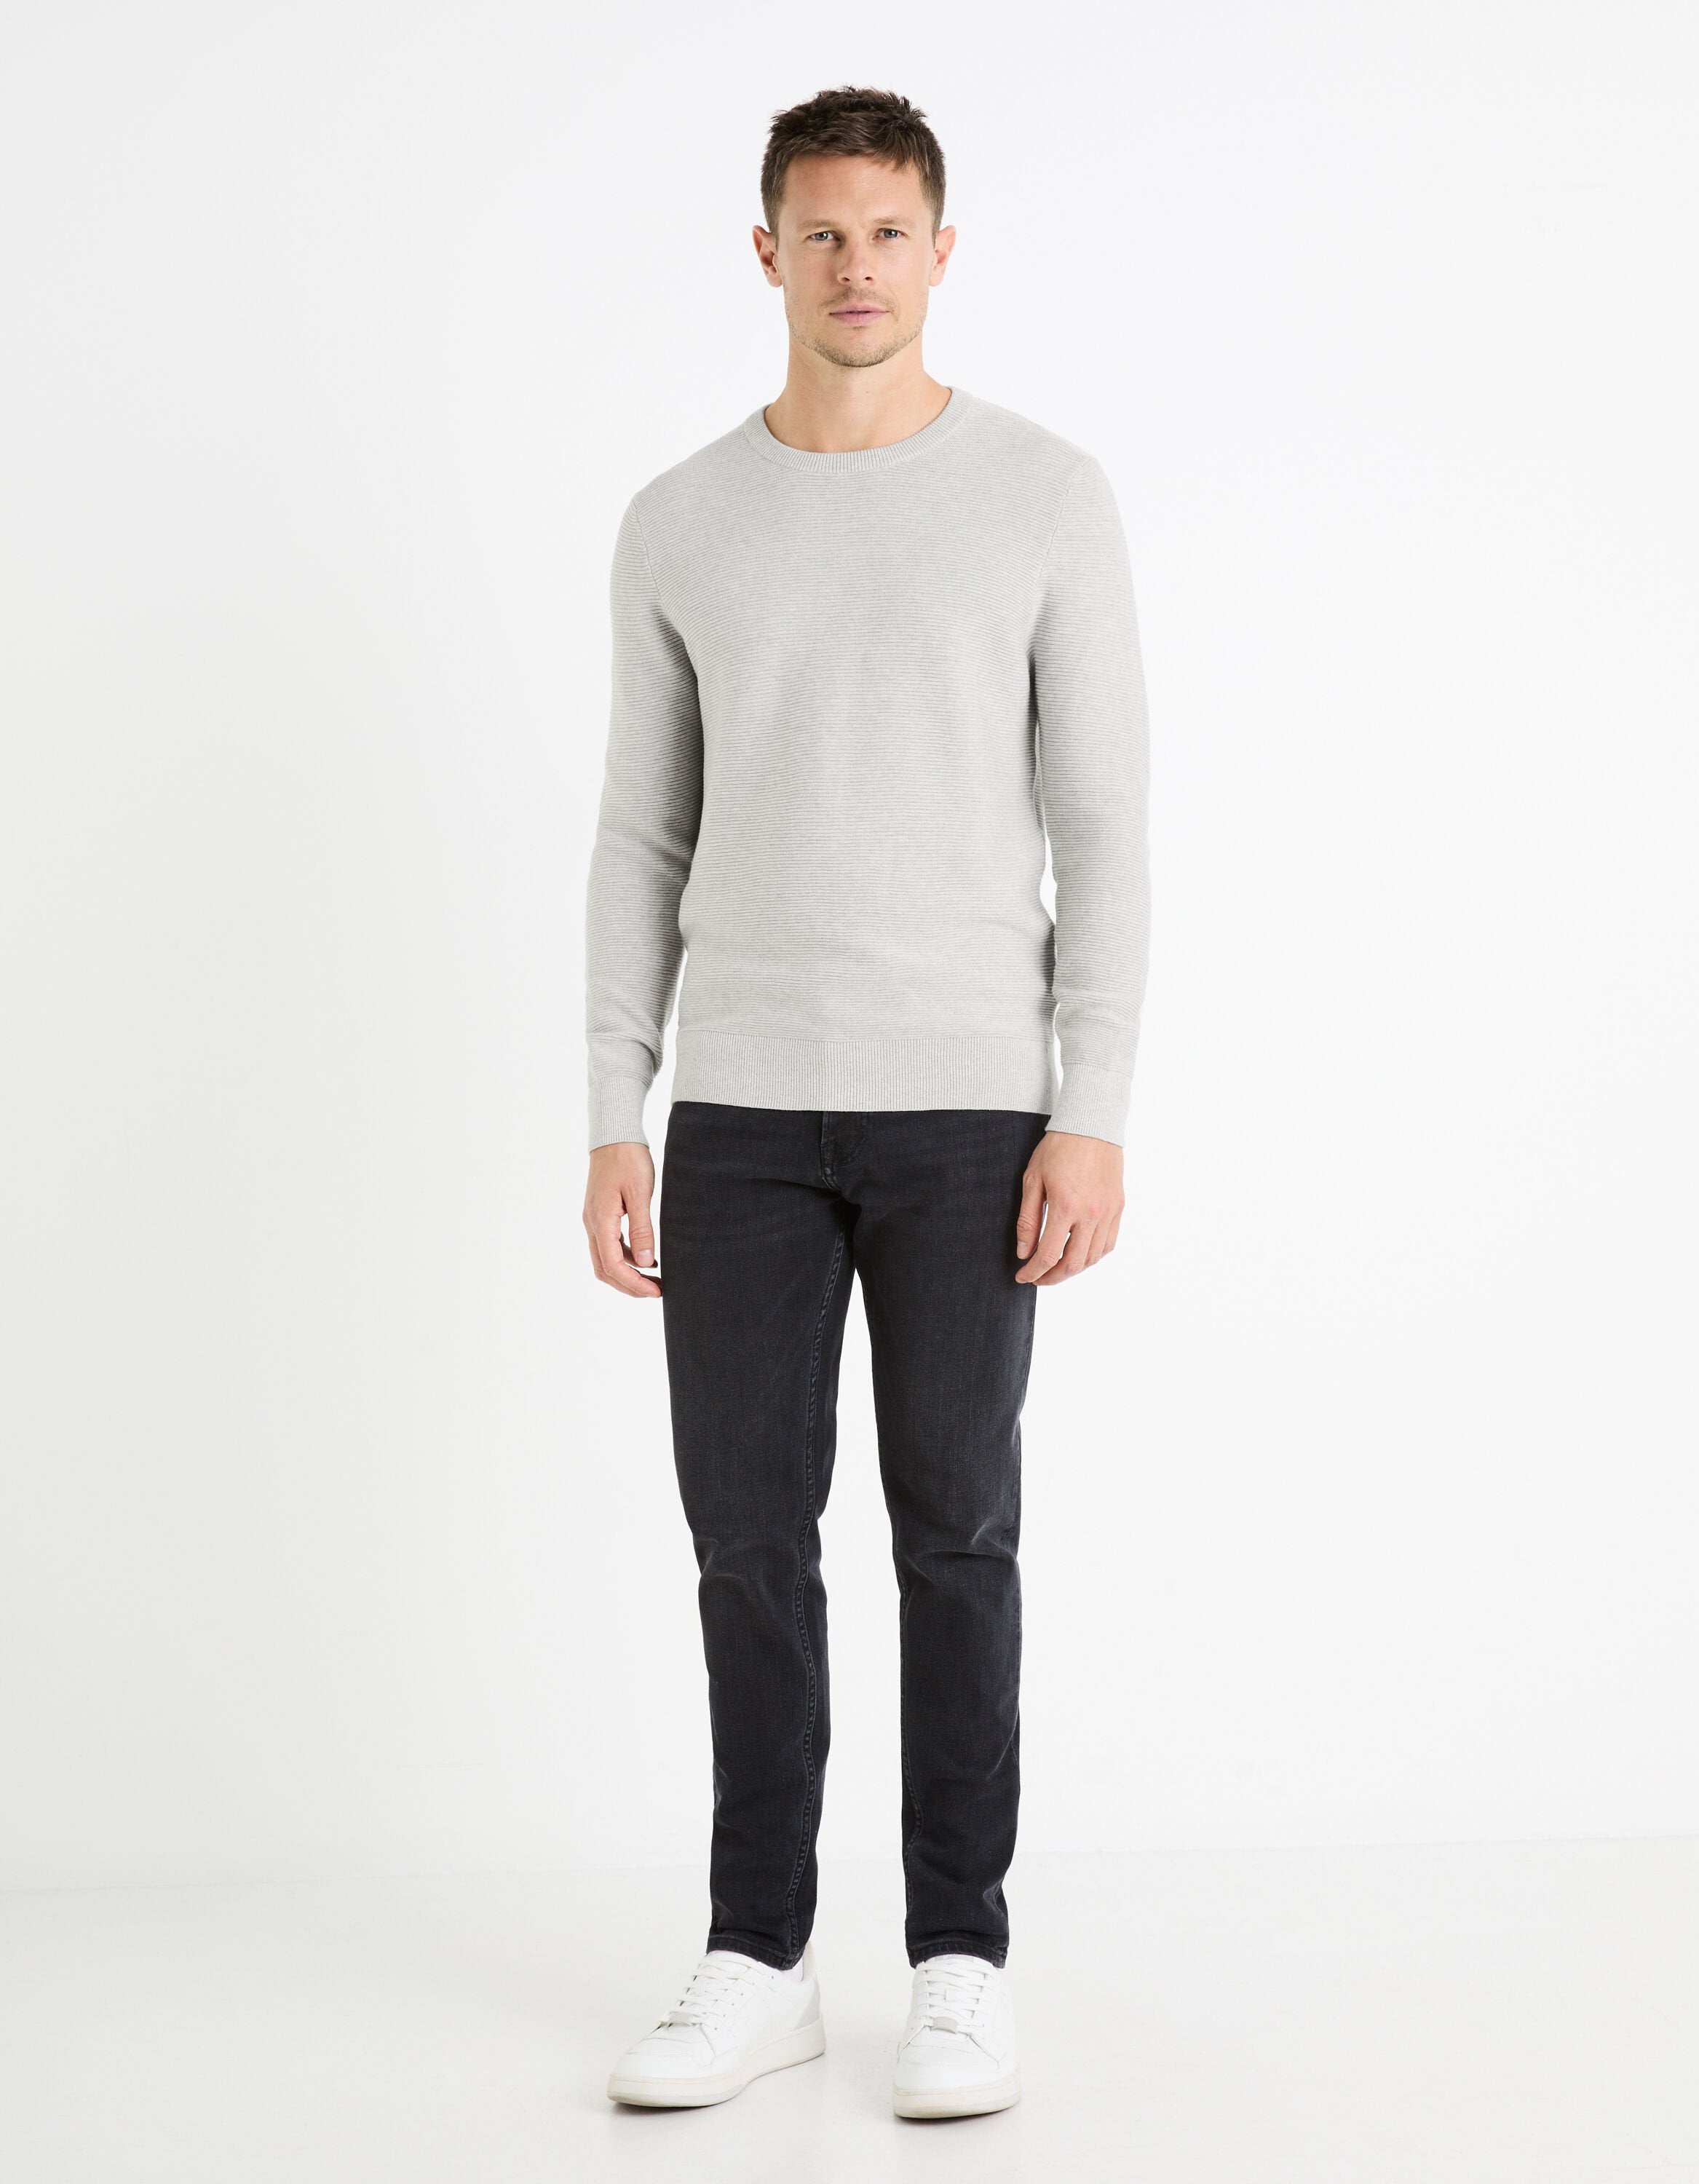 Round Neck Sweater 100% Cotton_FEOTTONI_GREY MEL_03